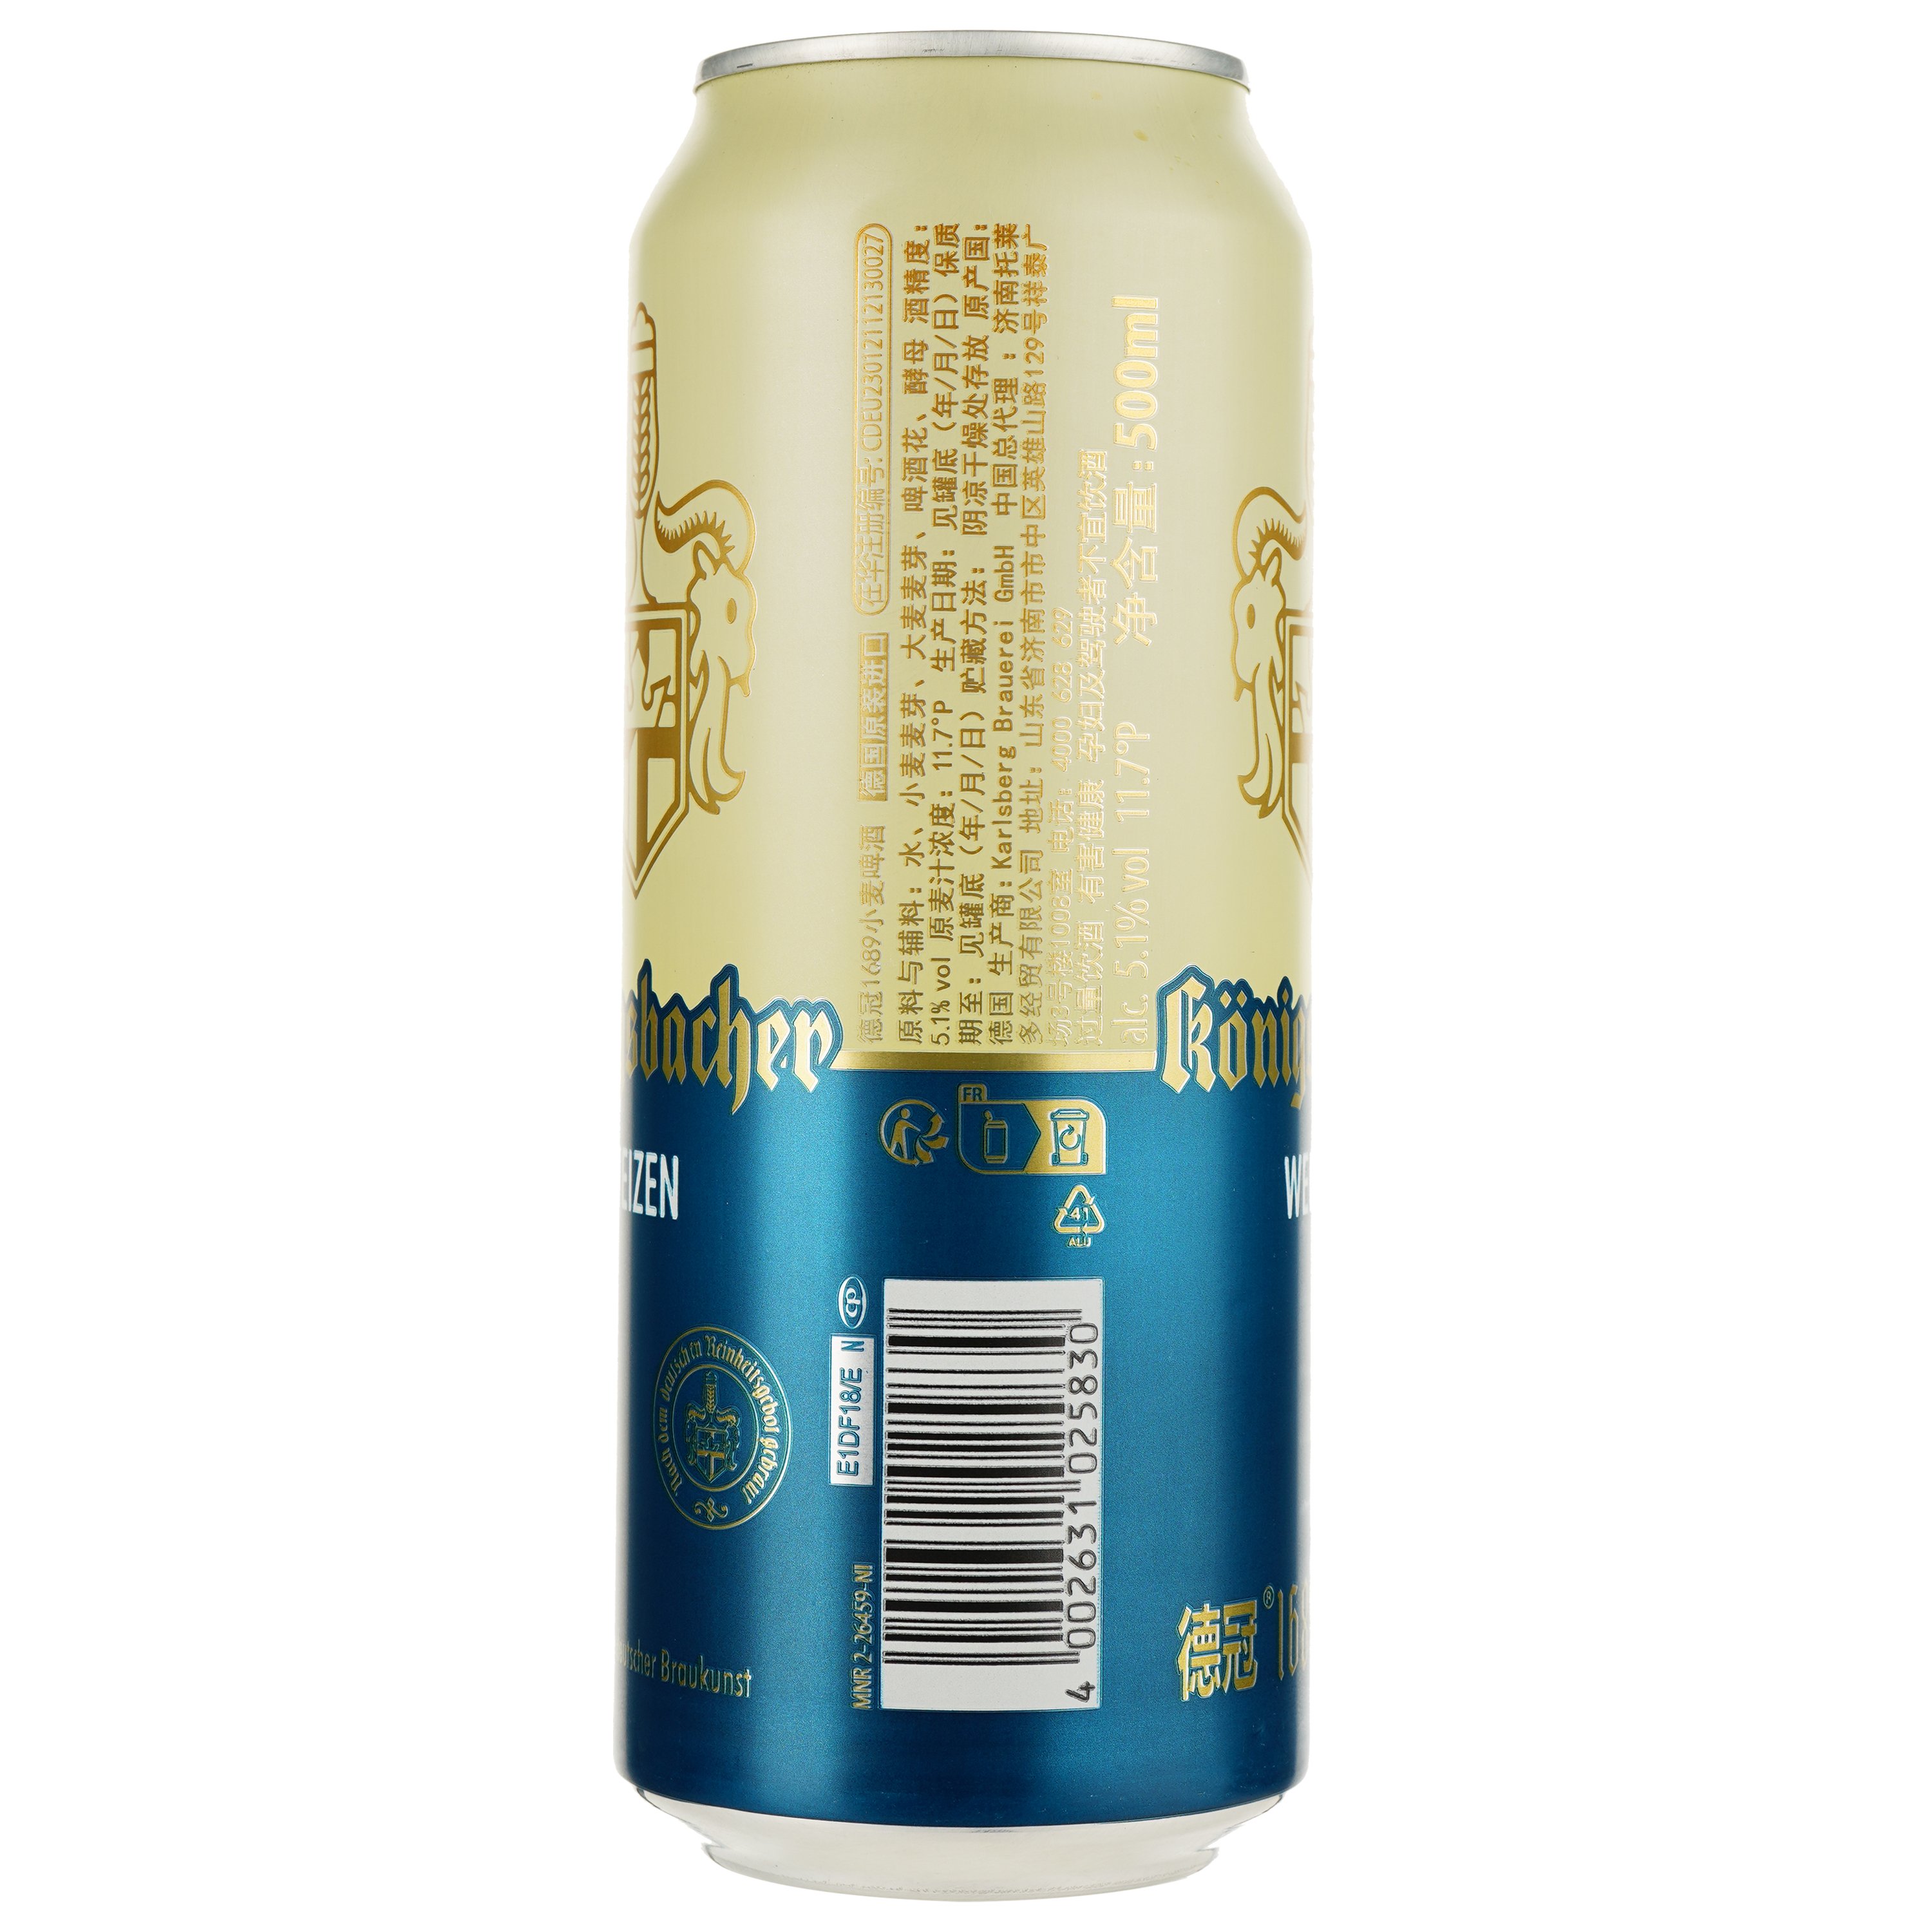 Пиво Konigsbacher Weizen светлое 5.1% 0.5 л ж/б - фото 2